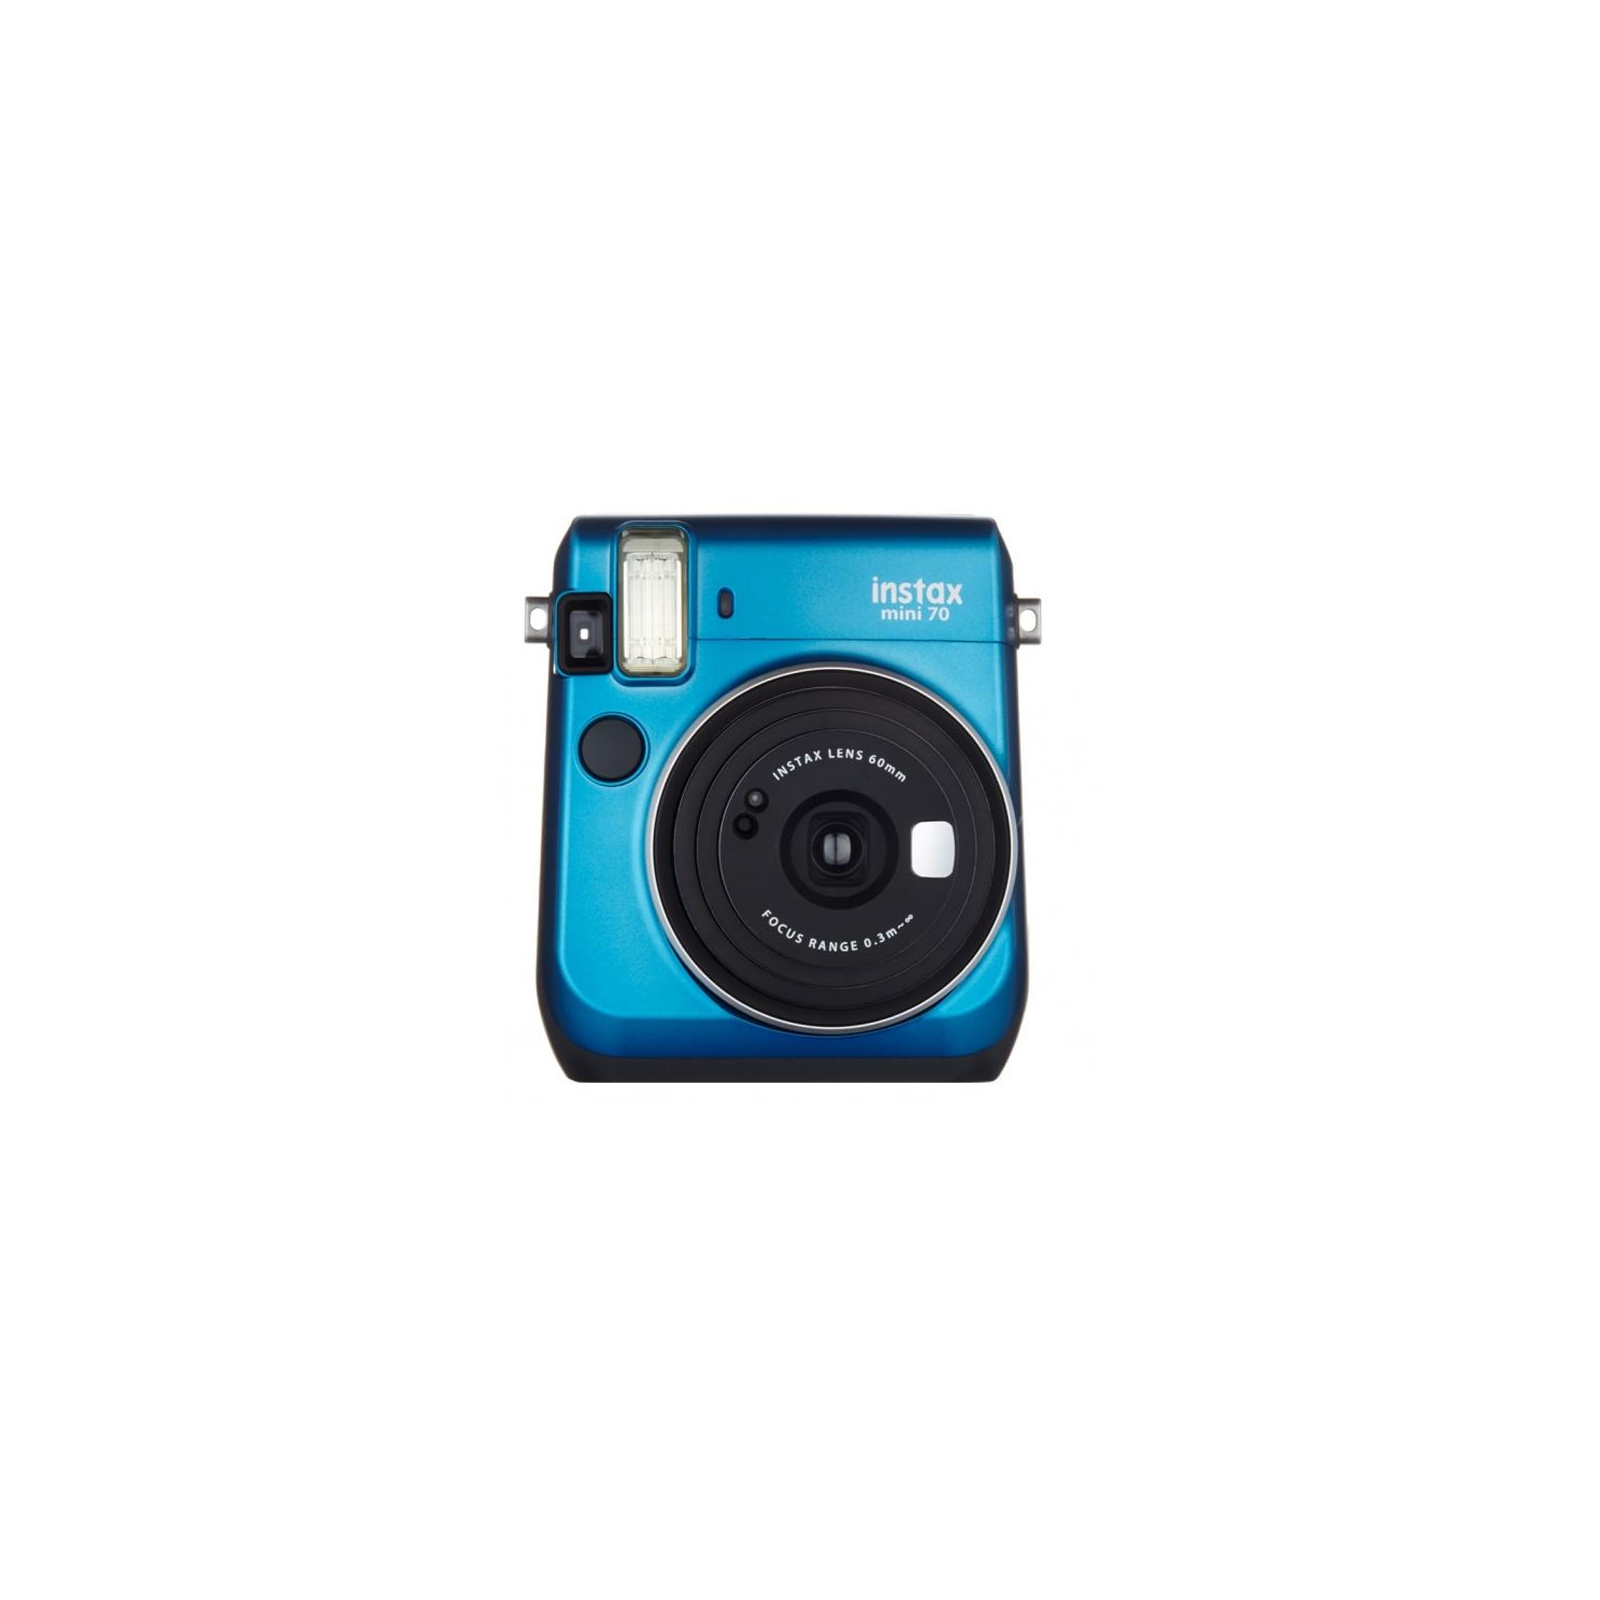 Камера моментальной печати Fujifilm Instax Mini 70 Blue EX D (16496079)